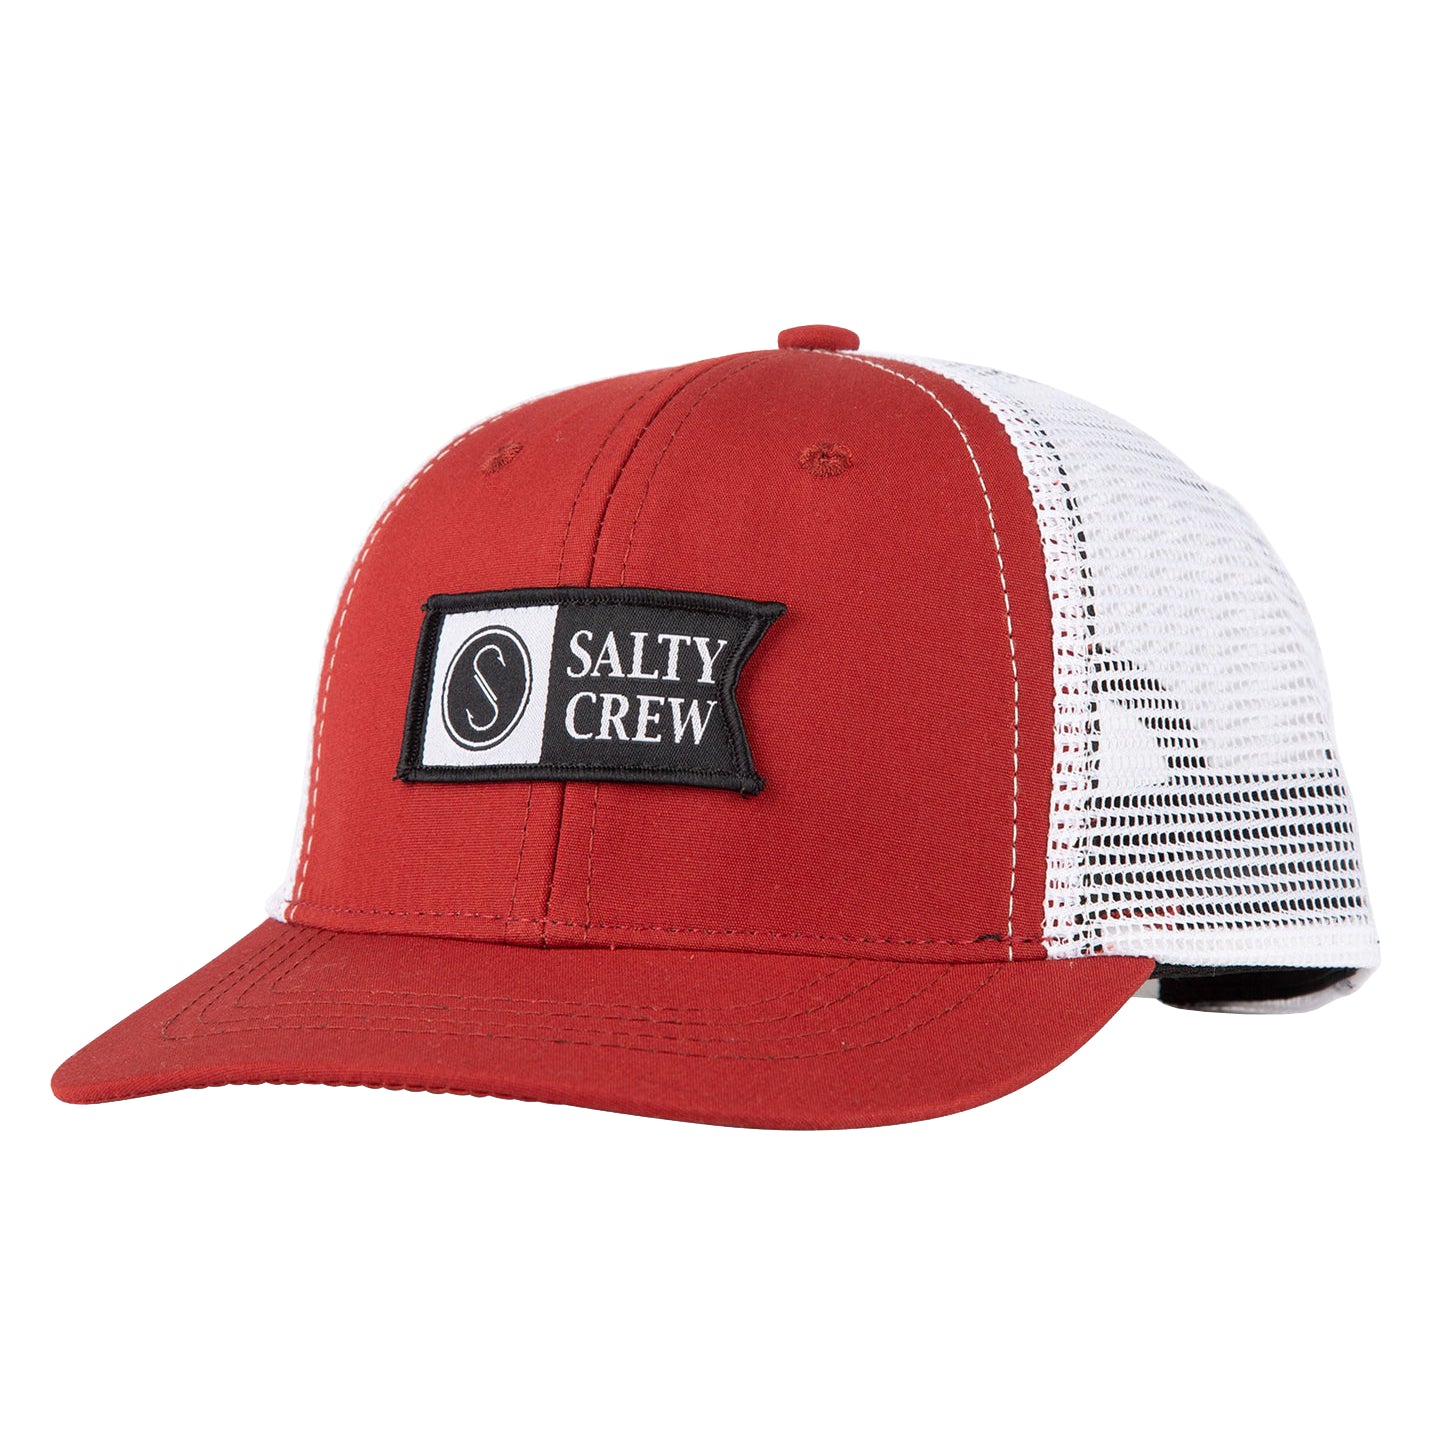 Salty Crew Pinnacle  Boys Retro Trucker Hat Rust/White One size